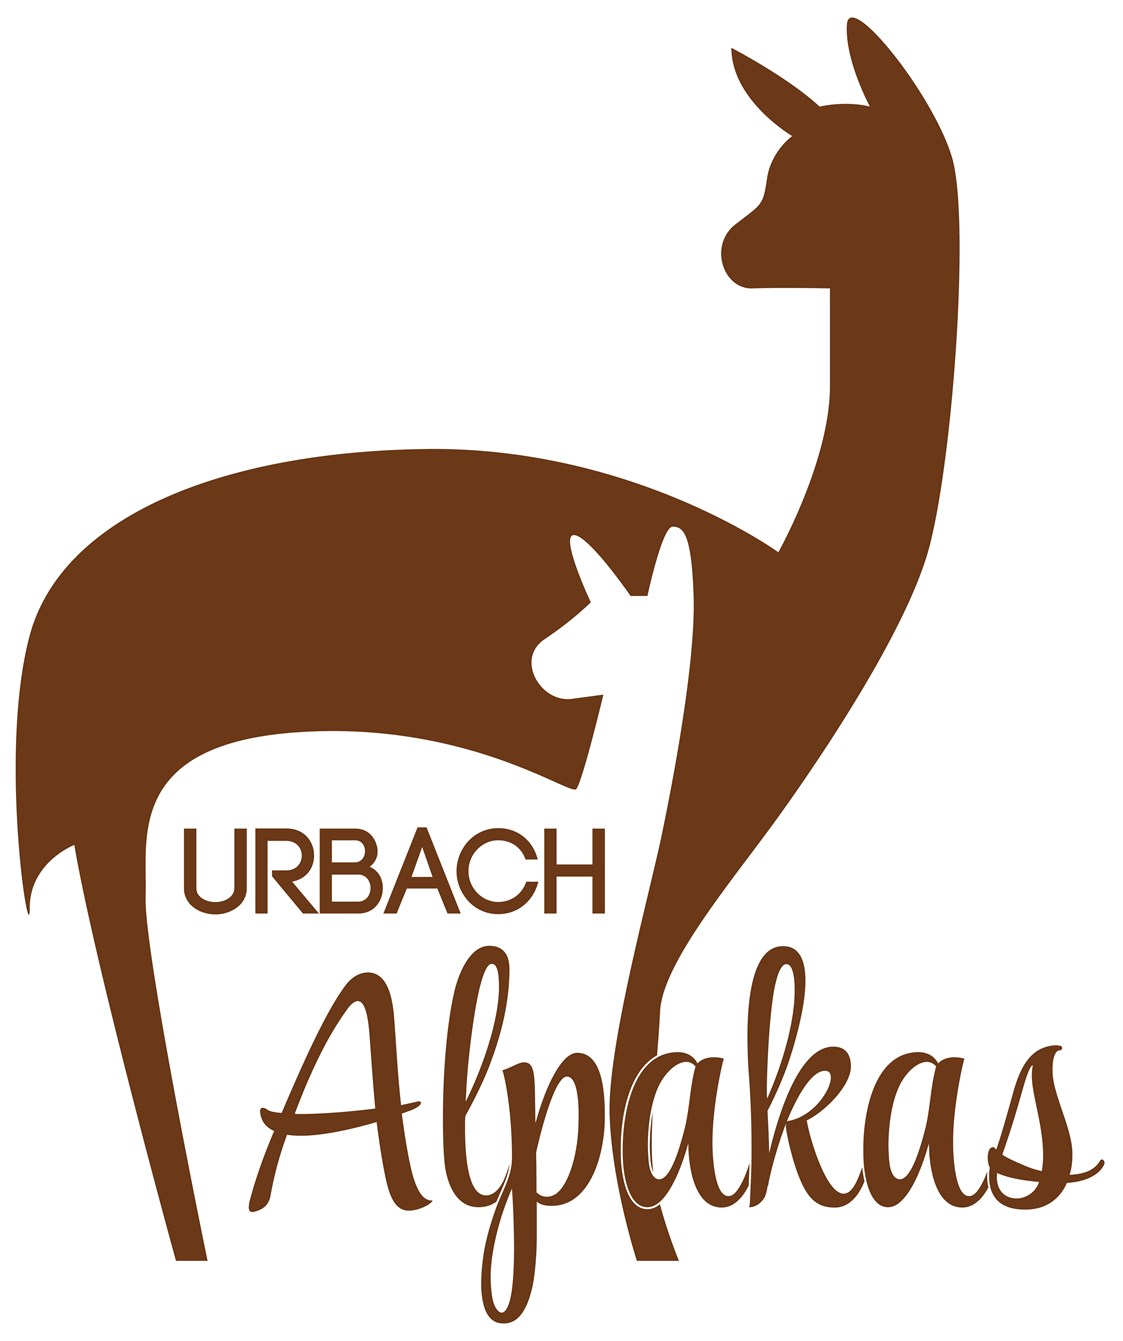 Unternehmen: URBACH Alpakas - Urbach Alpakas